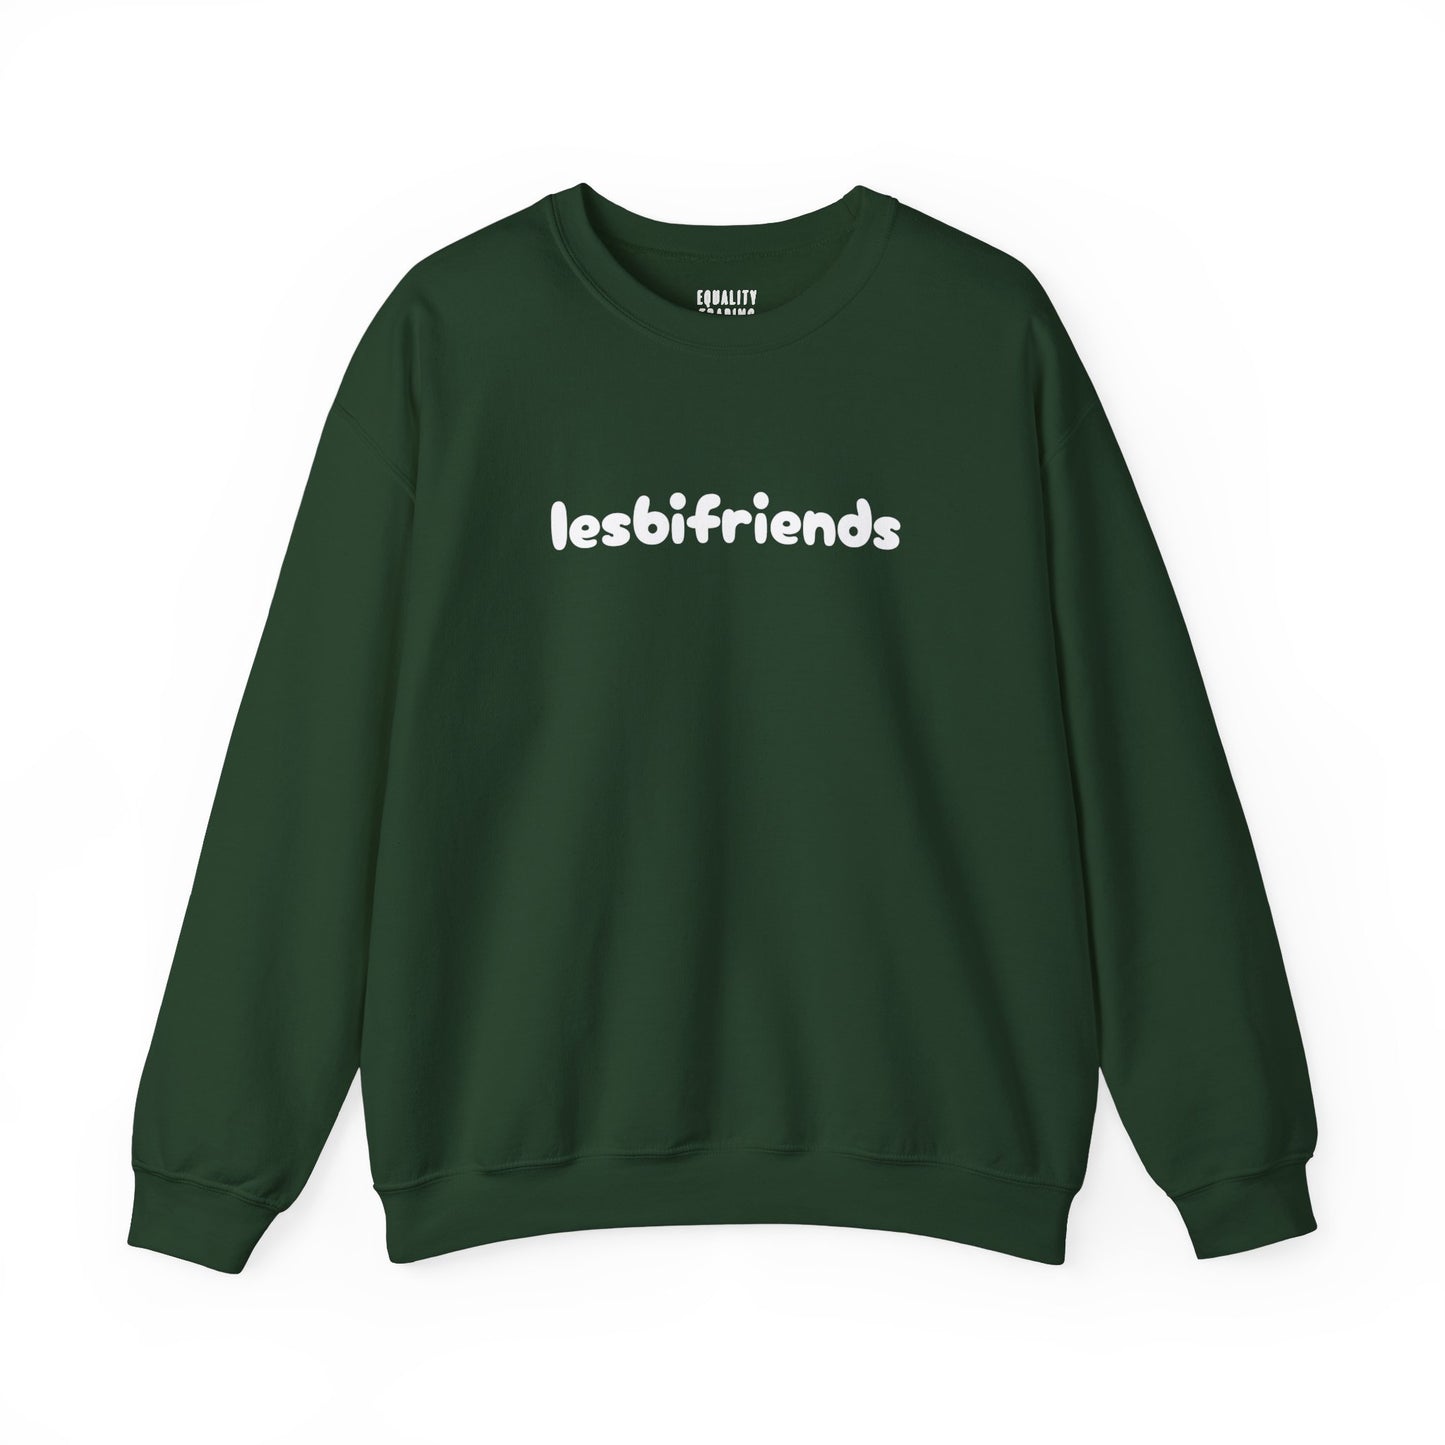 Lesbifriends Sweatshirt